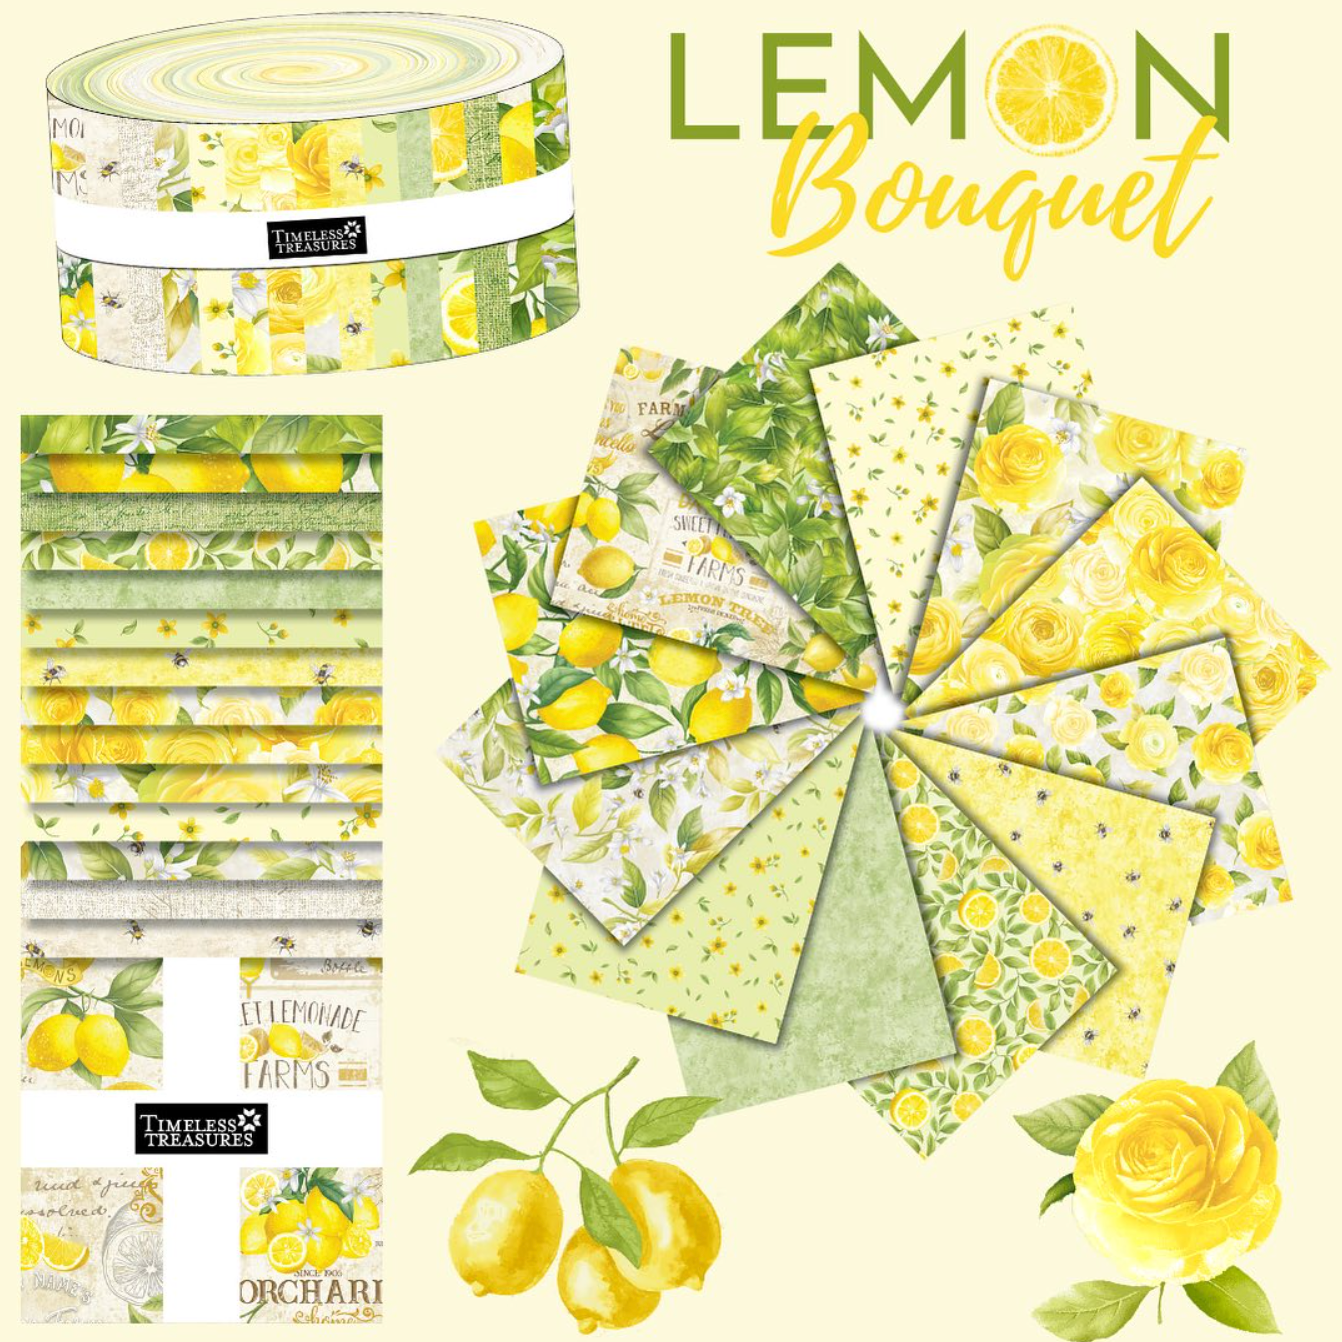 Lemon Bouquet by Timeless Treasures Fabrics